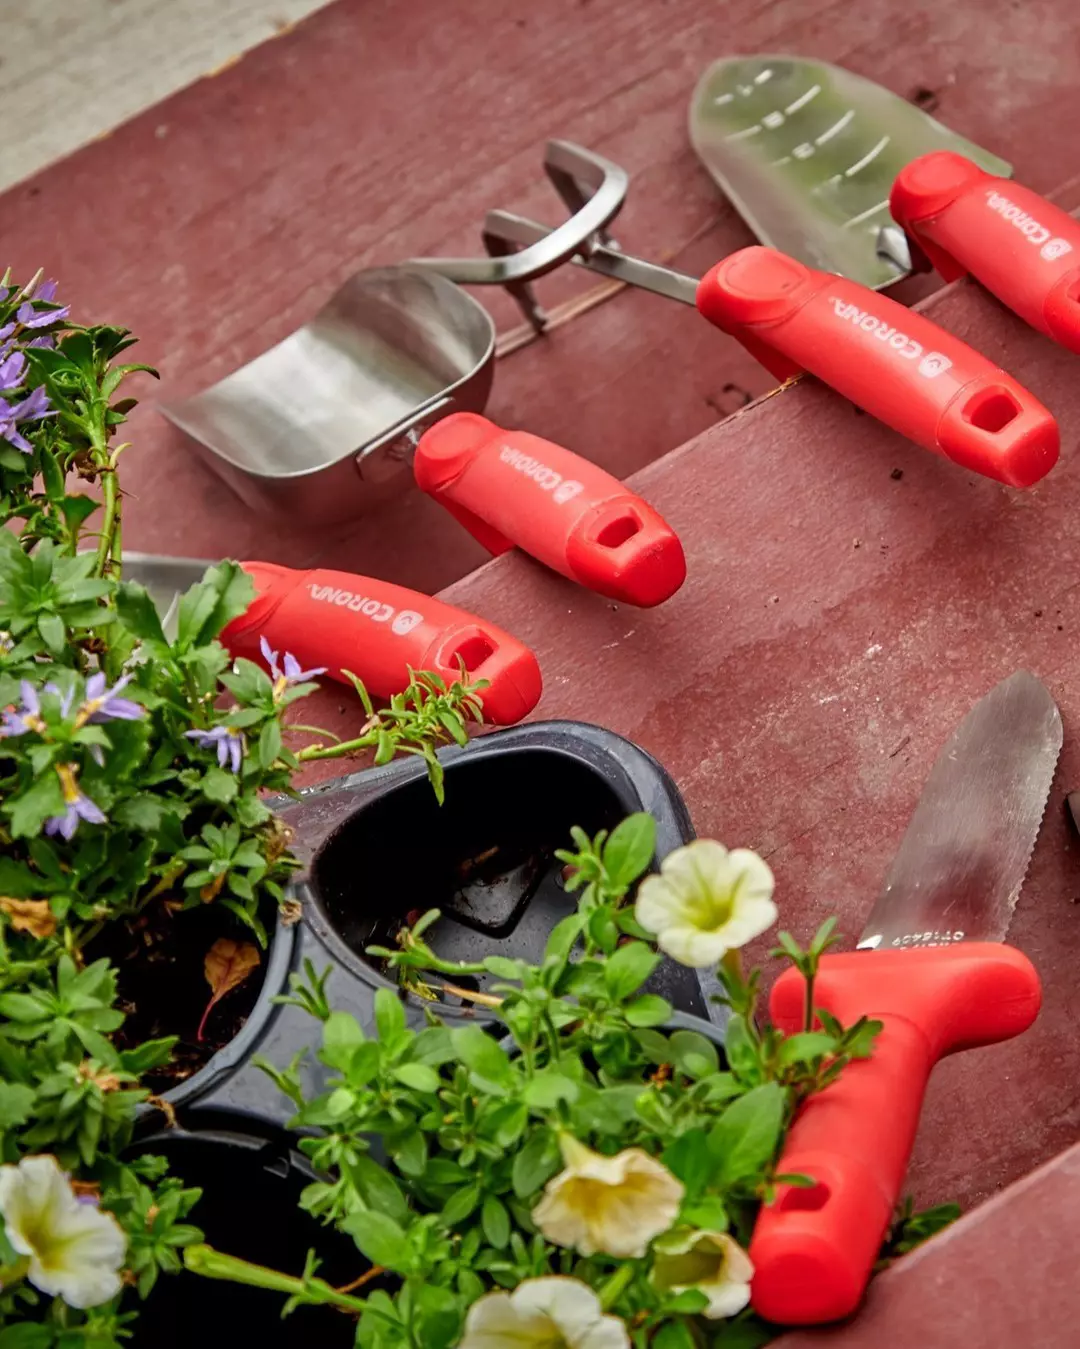 some gardening tools from Corona brand